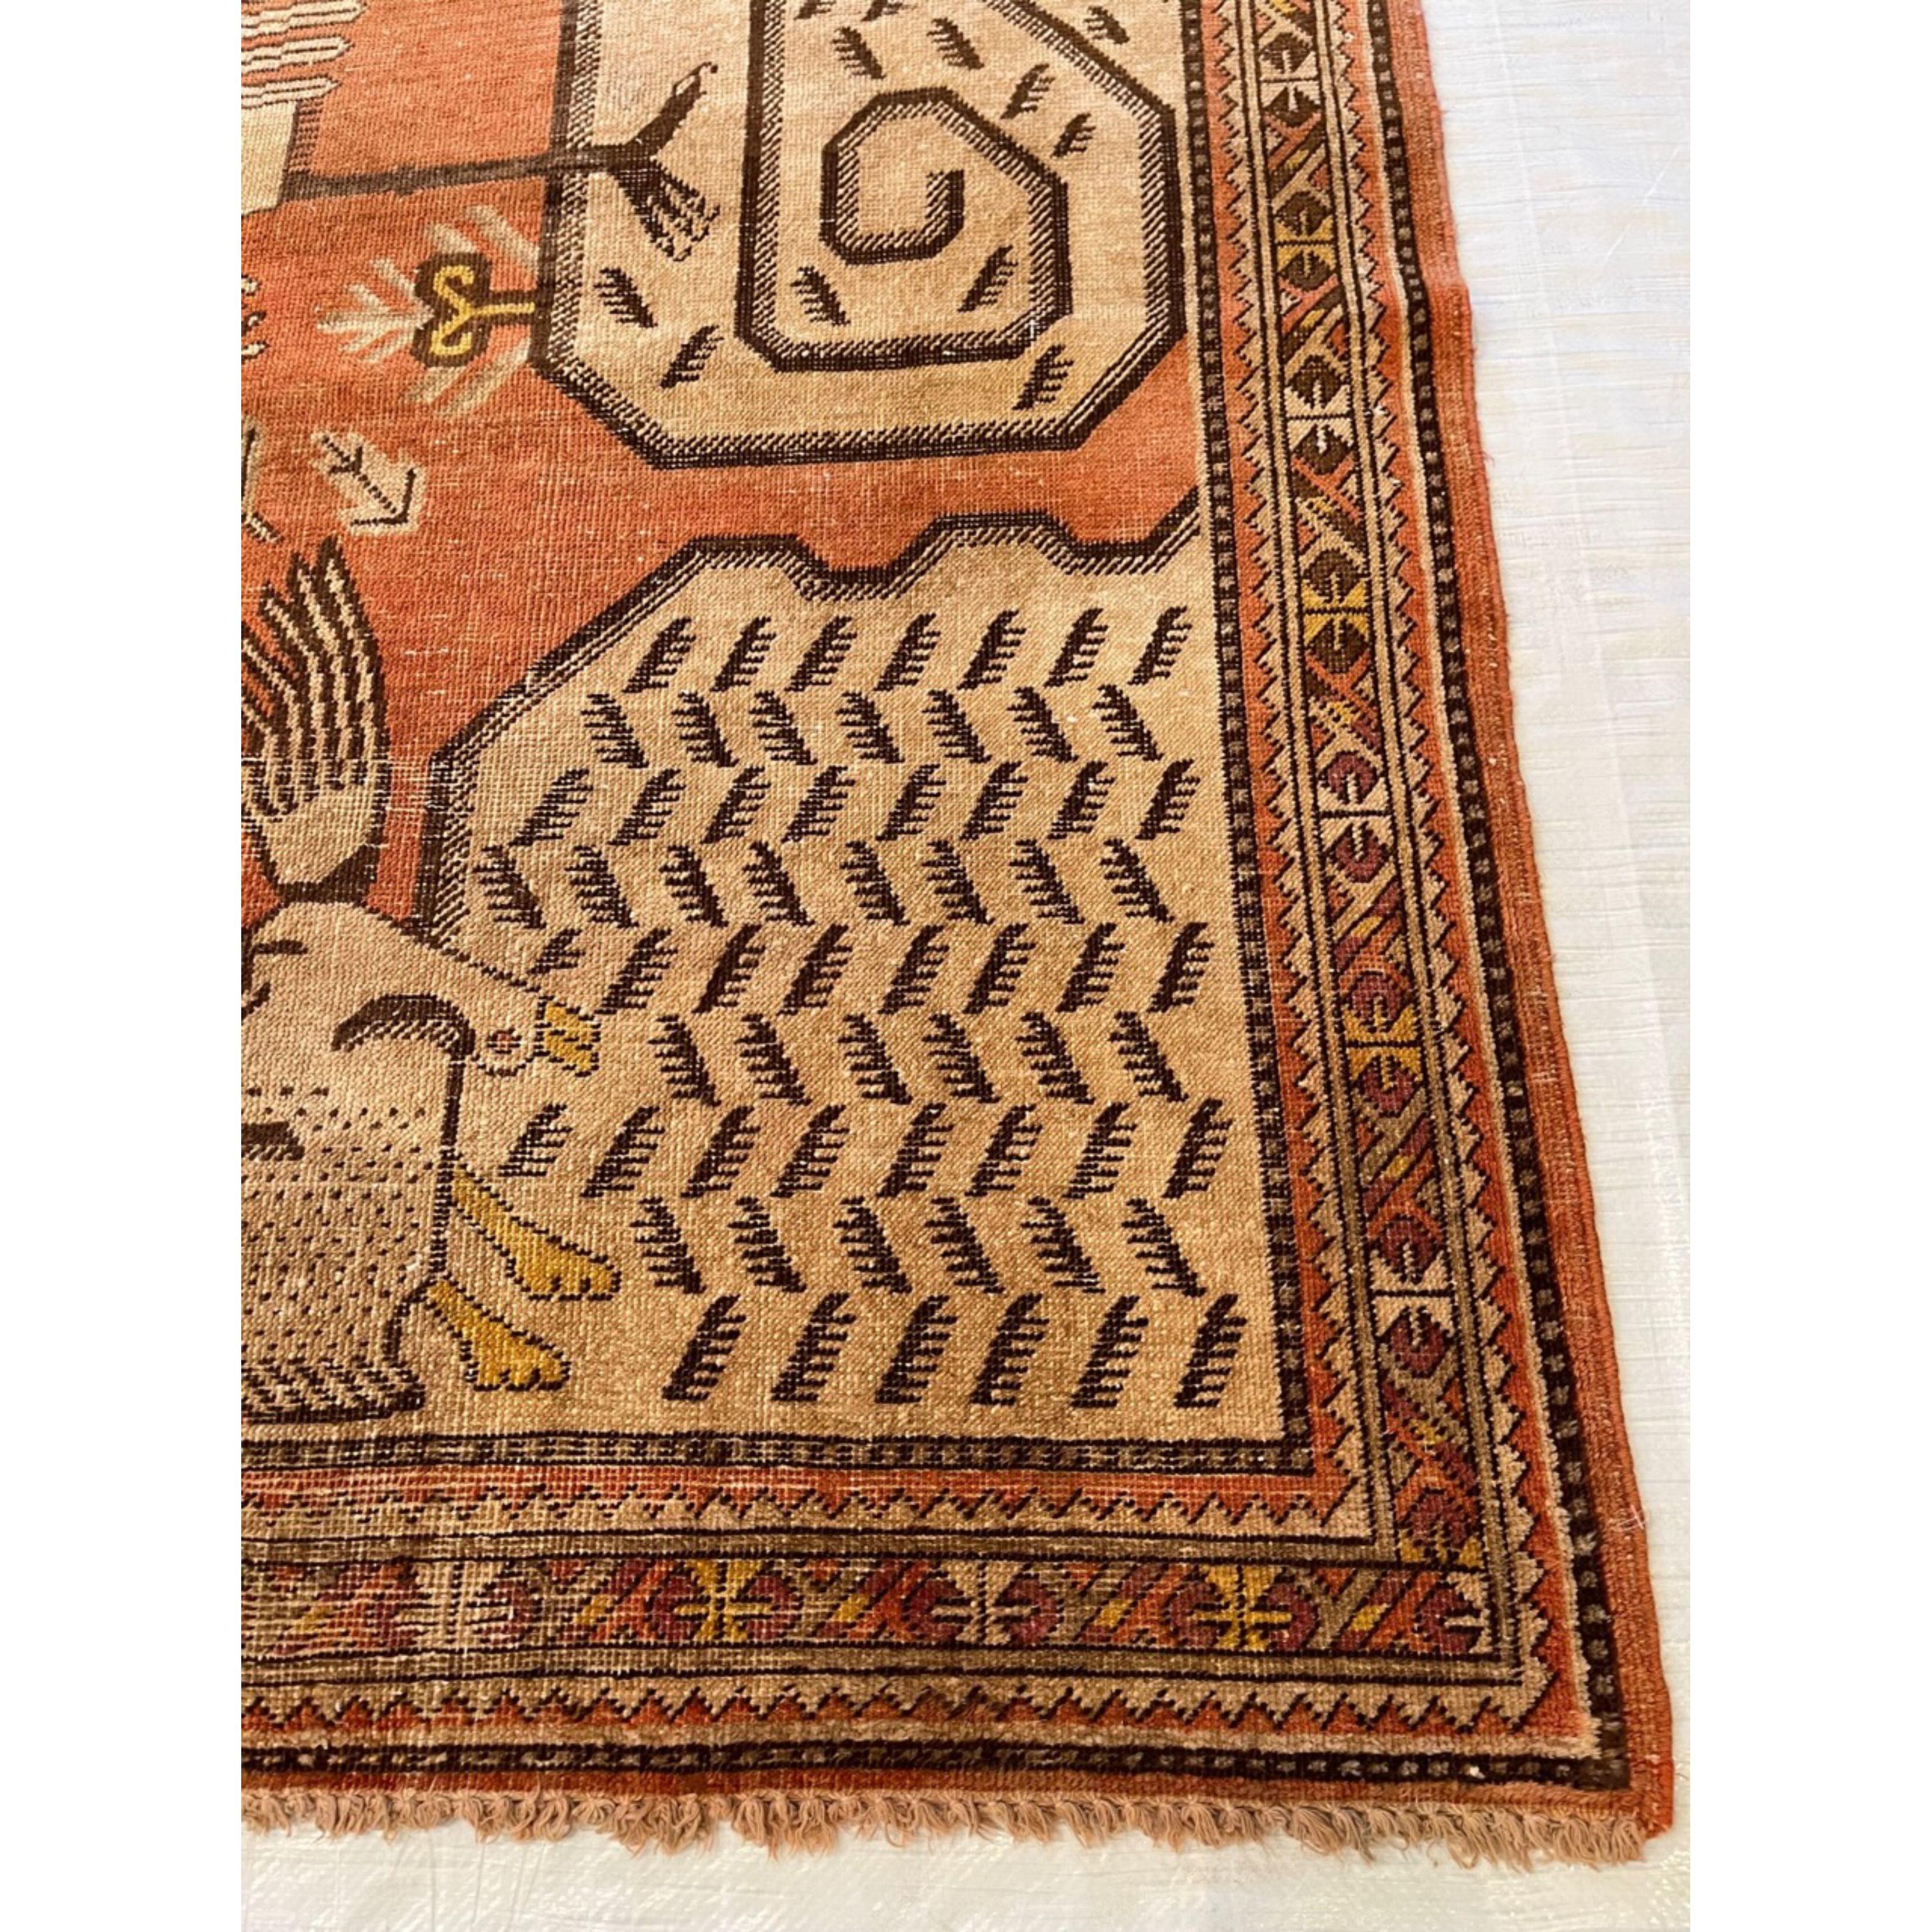 Other Antique Samarkand Rug with Animal Design